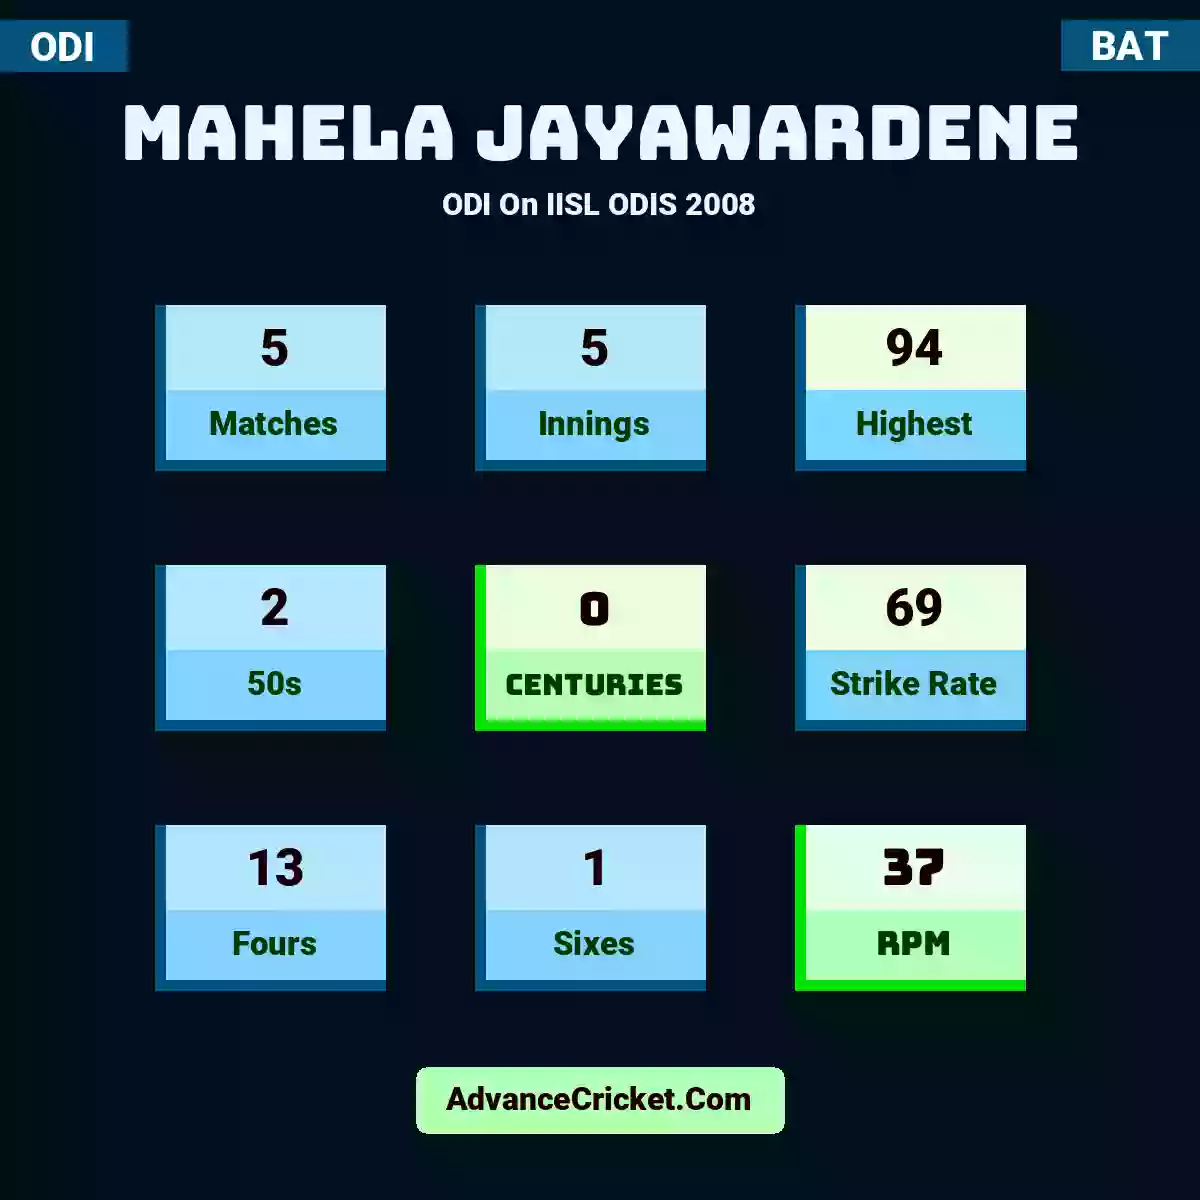 Mahela Jayawardene ODI  On IISL ODIS 2008, Mahela Jayawardene played 5 matches, scored 94 runs as highest, 2 half-centuries, and 0 centuries, with a strike rate of 69. M.Jayawardene hit 13 fours and 1 sixes, with an RPM of 37.